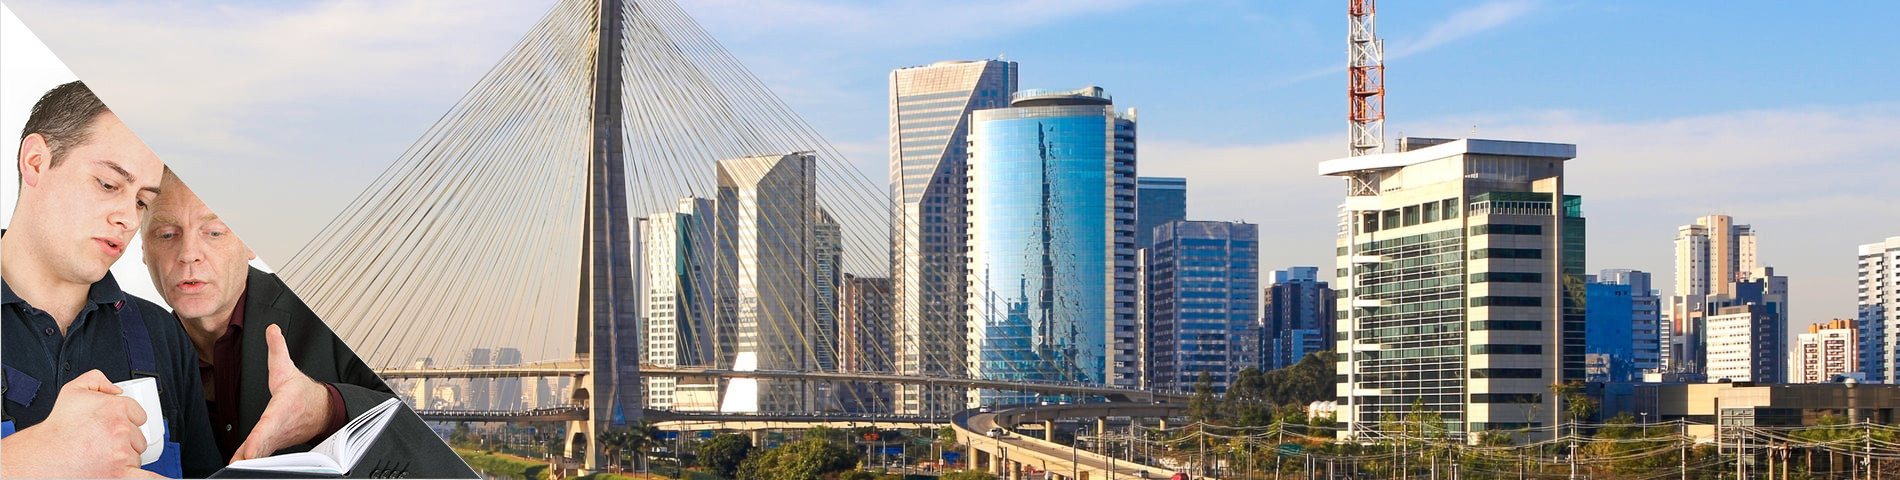 Sao Paulo - Lliçons Individuals